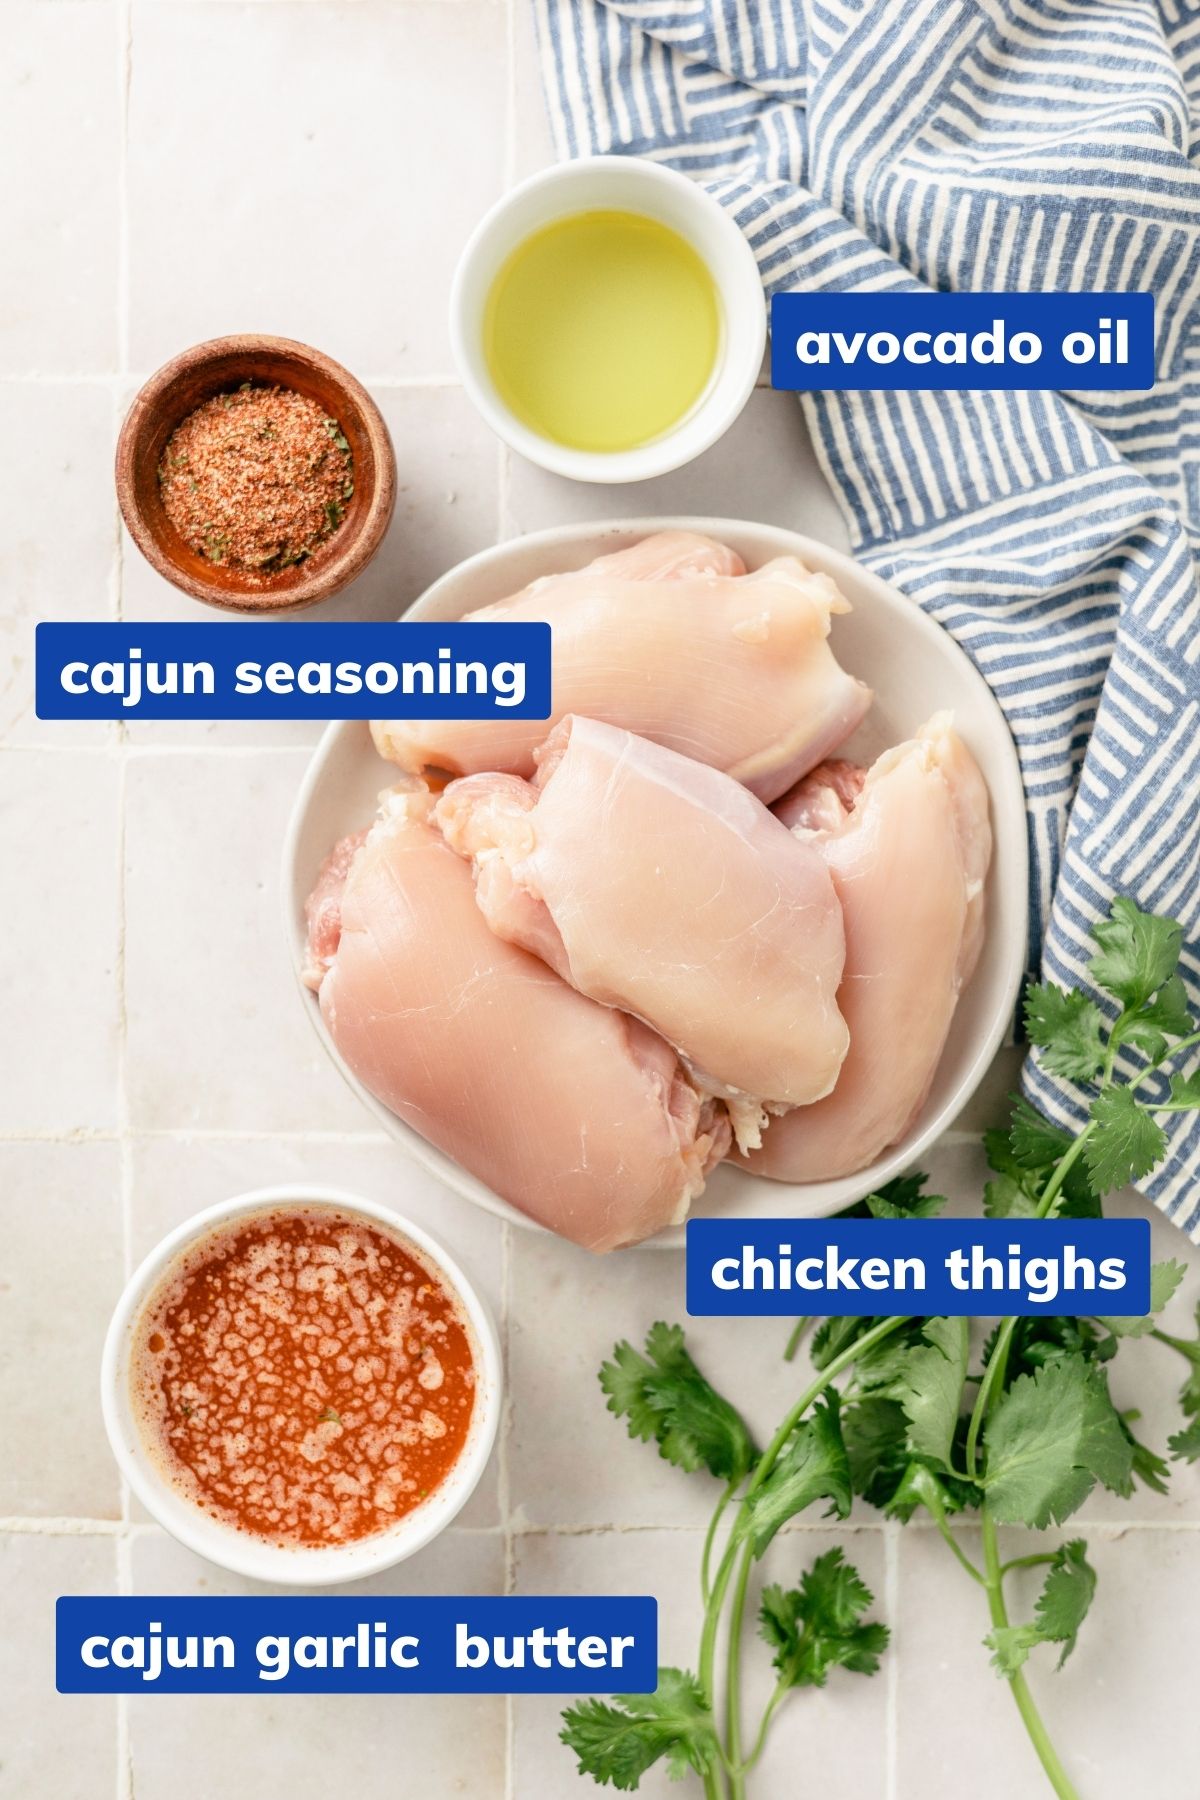 ingredients needed to make cajun chicken thighs: cajun seasoning, avocado oil, chicken thighs and cajun garlic butter on separate bowls